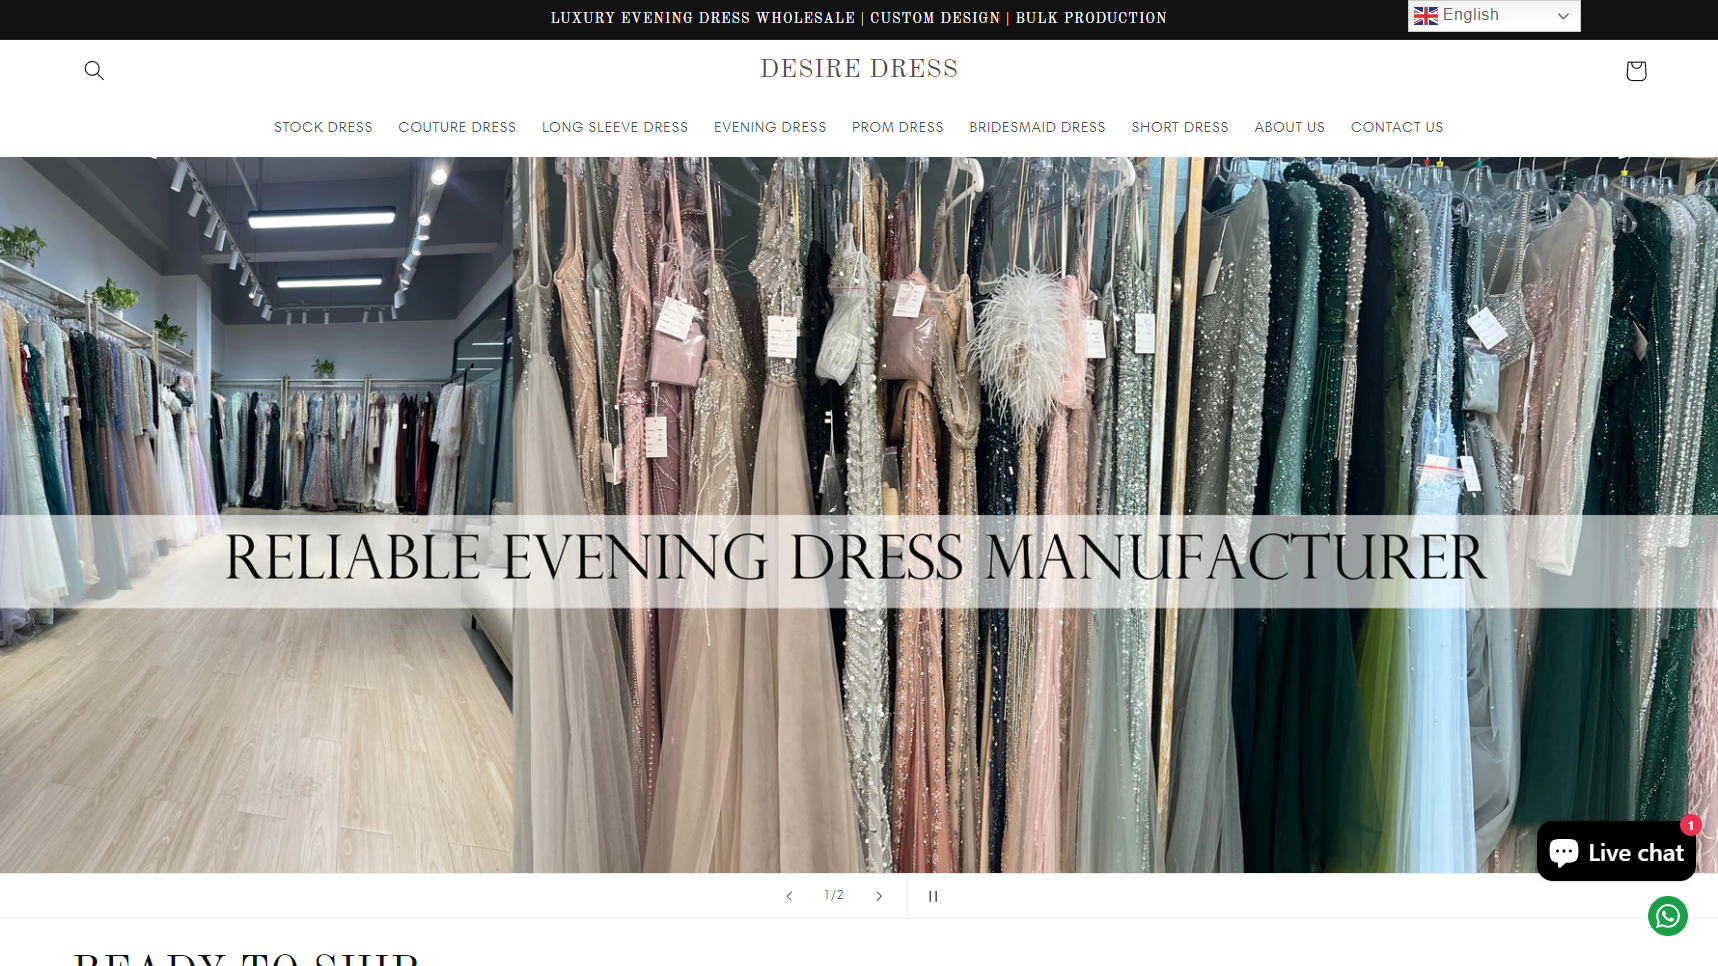 Desire Couture Dress - Cocktail Dress Manufacturer